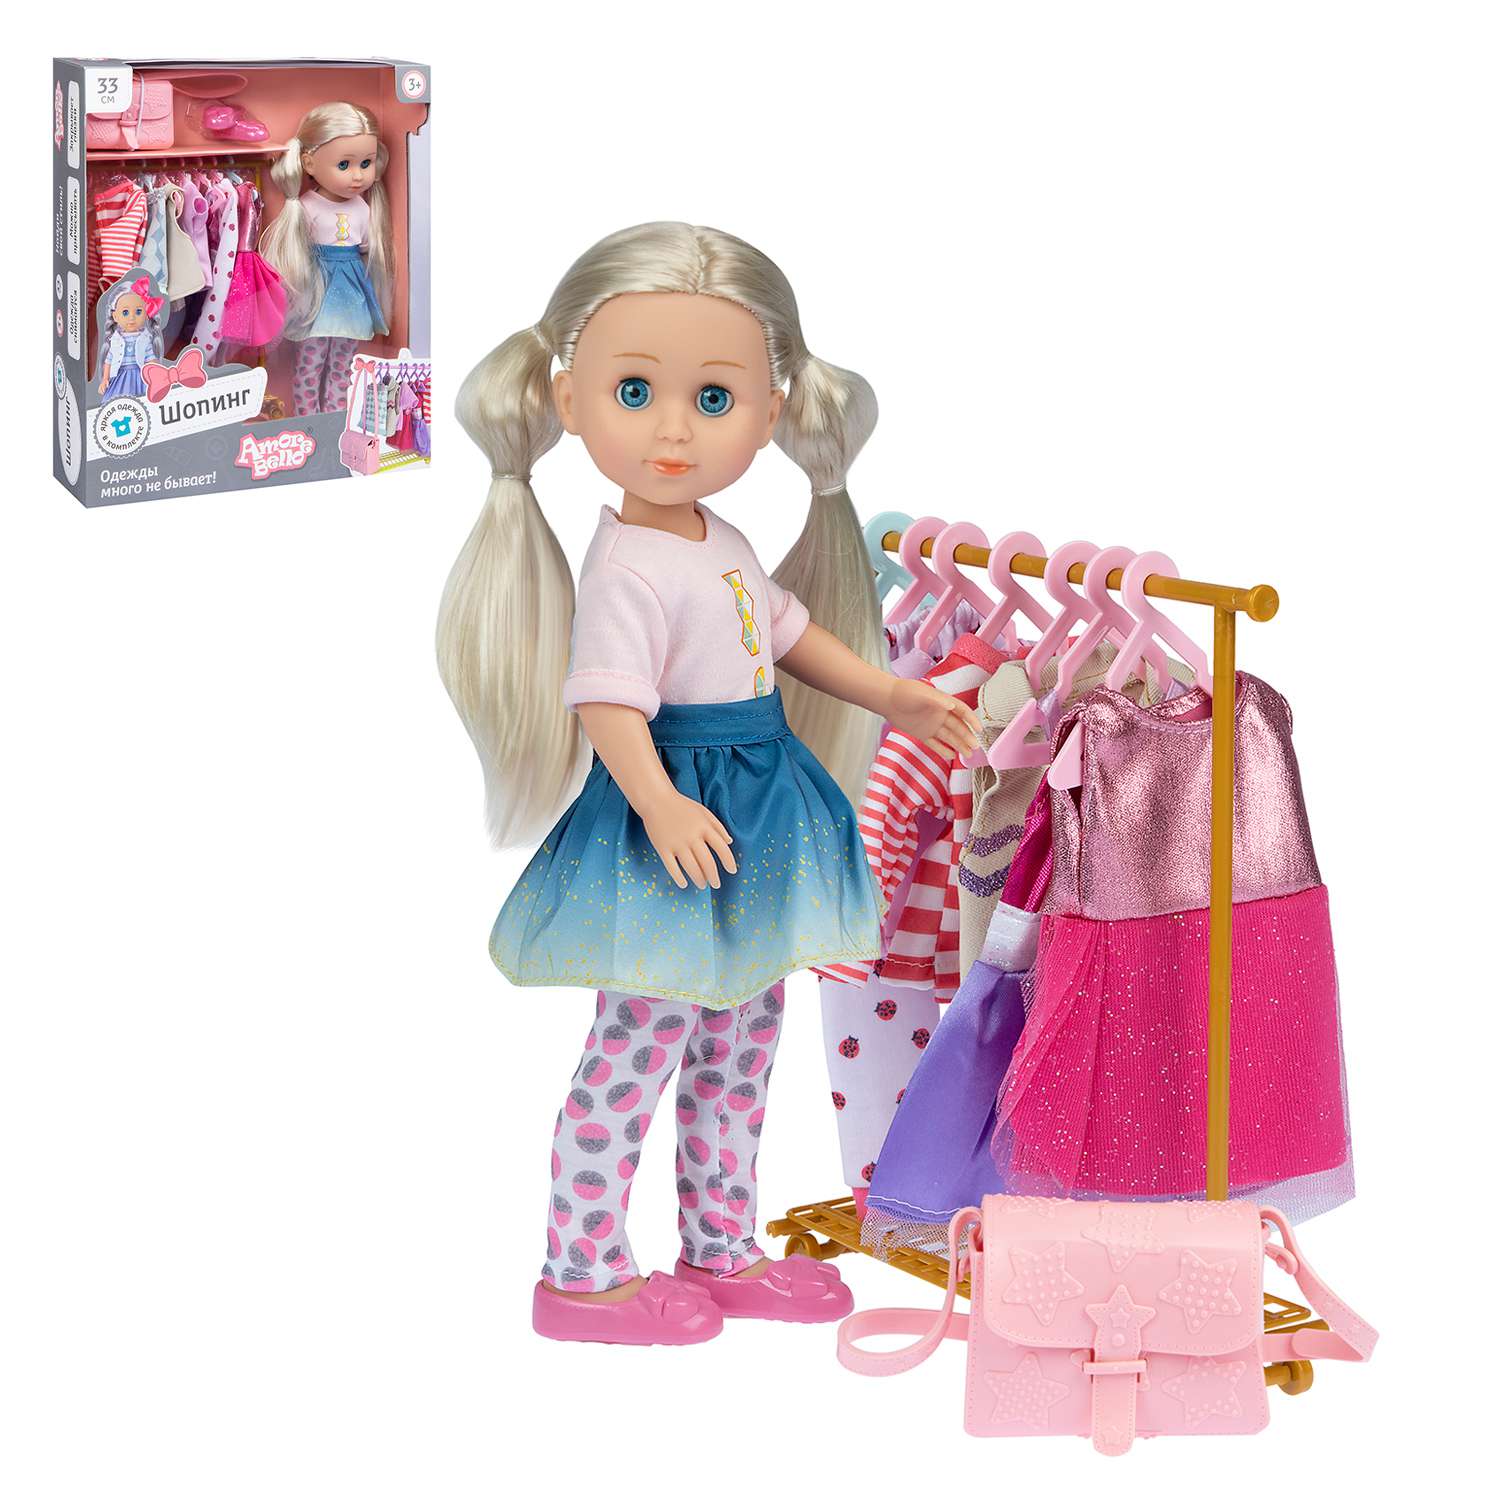 Кукла JB0211476 Шопинг с одеждой и аксессуарами ТМ Amore Bello - Орск 